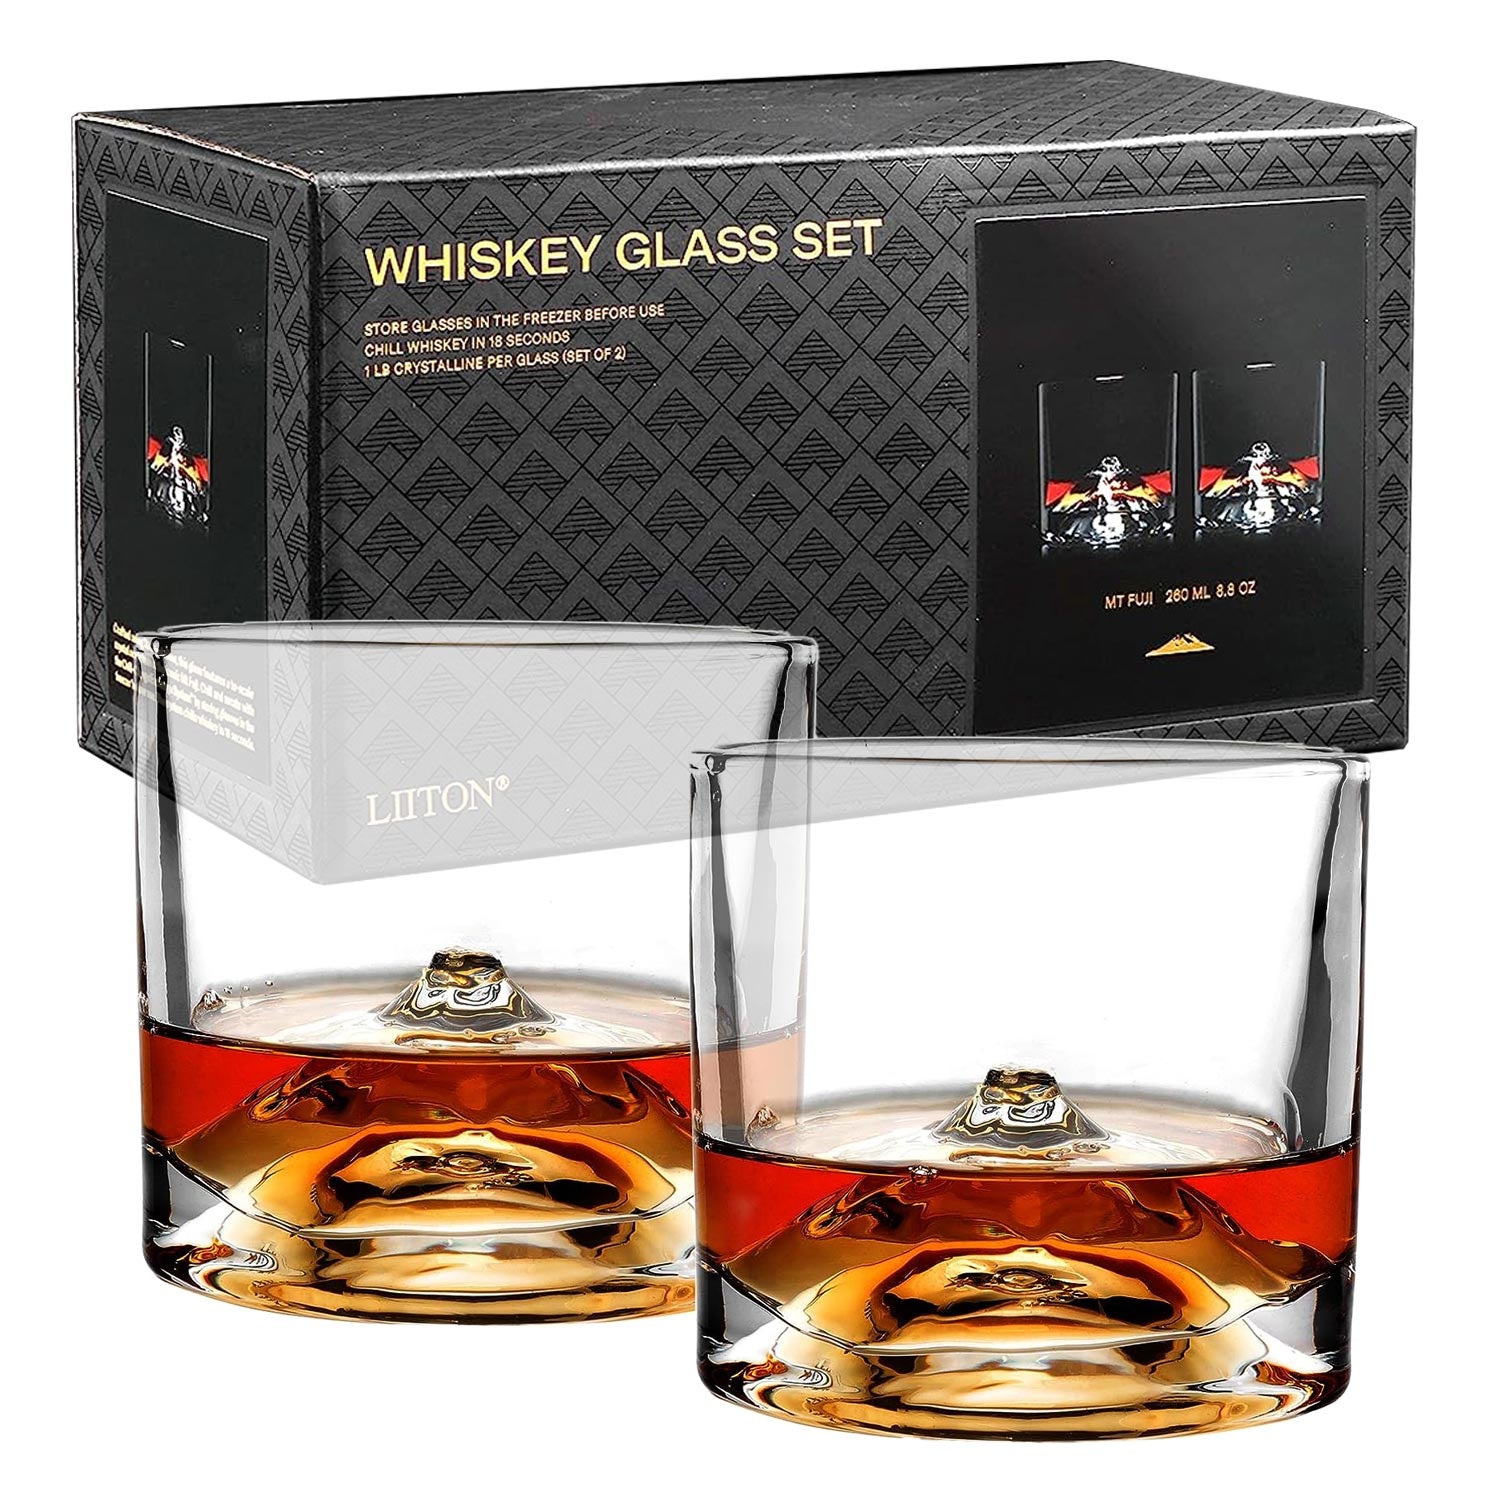 Mount Fuji Crystal Bourbon Whiskey Glasses - Set of 2 - LIITON